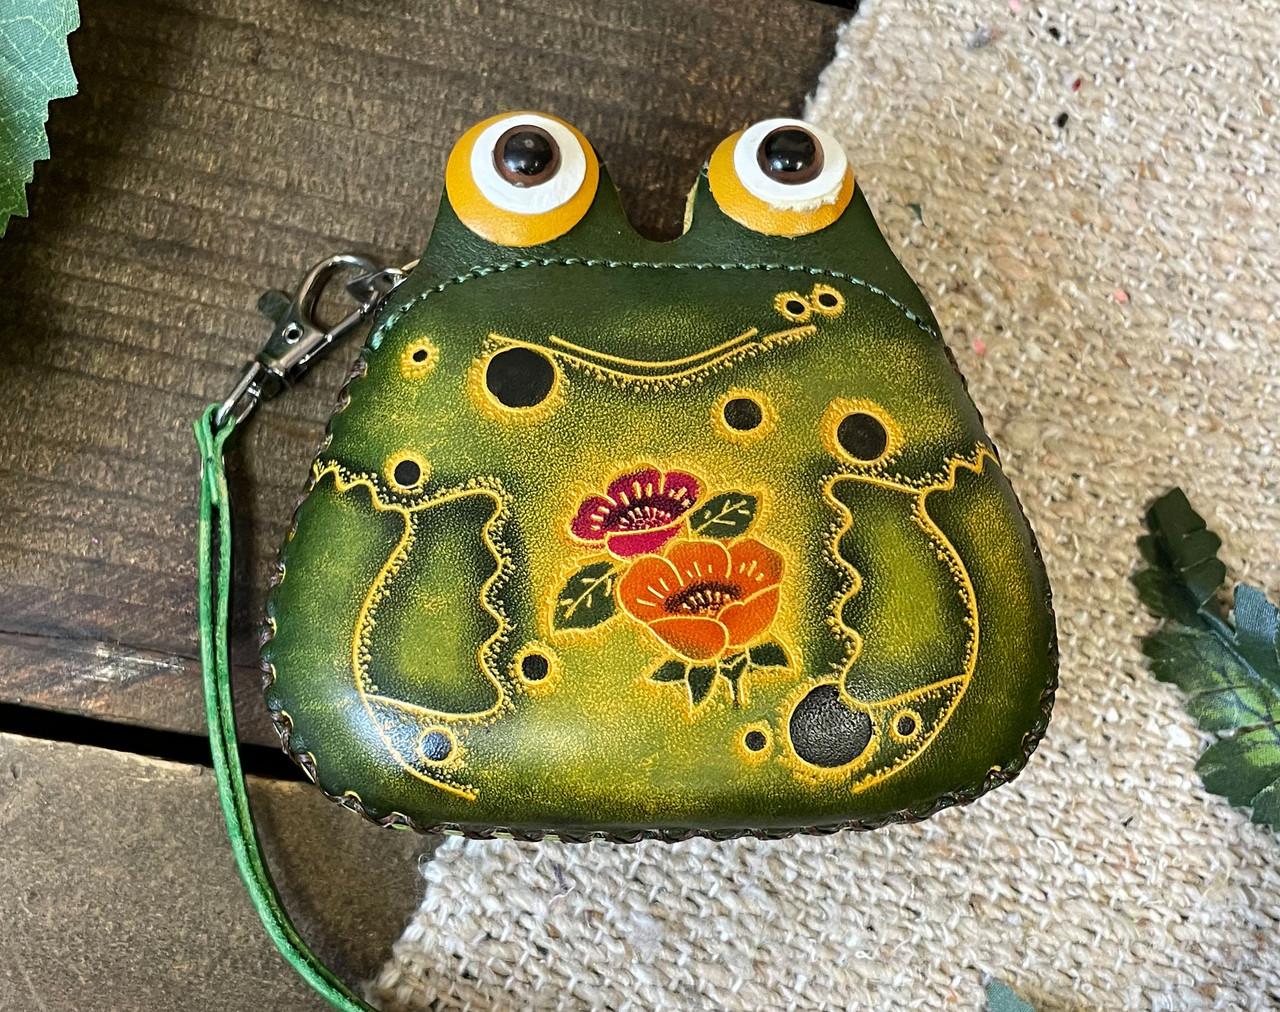 Crocheted frog purse | Coin purse crochet pattern, Crochet frog, Crochet